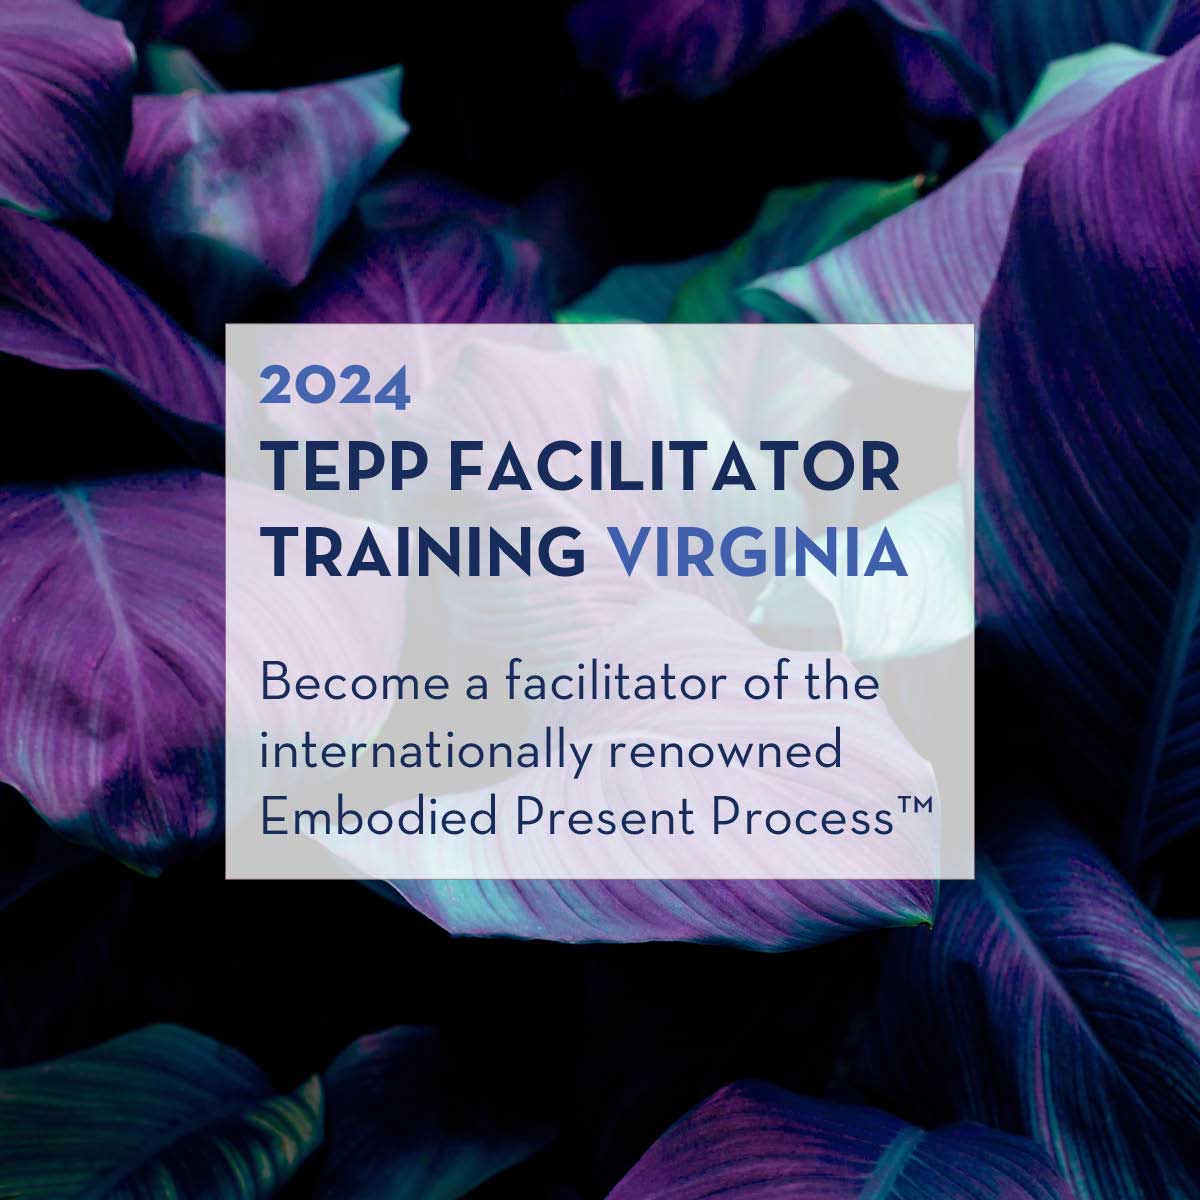 TEPP Facilitator Training (VA) Registration - The Embodied Present Process